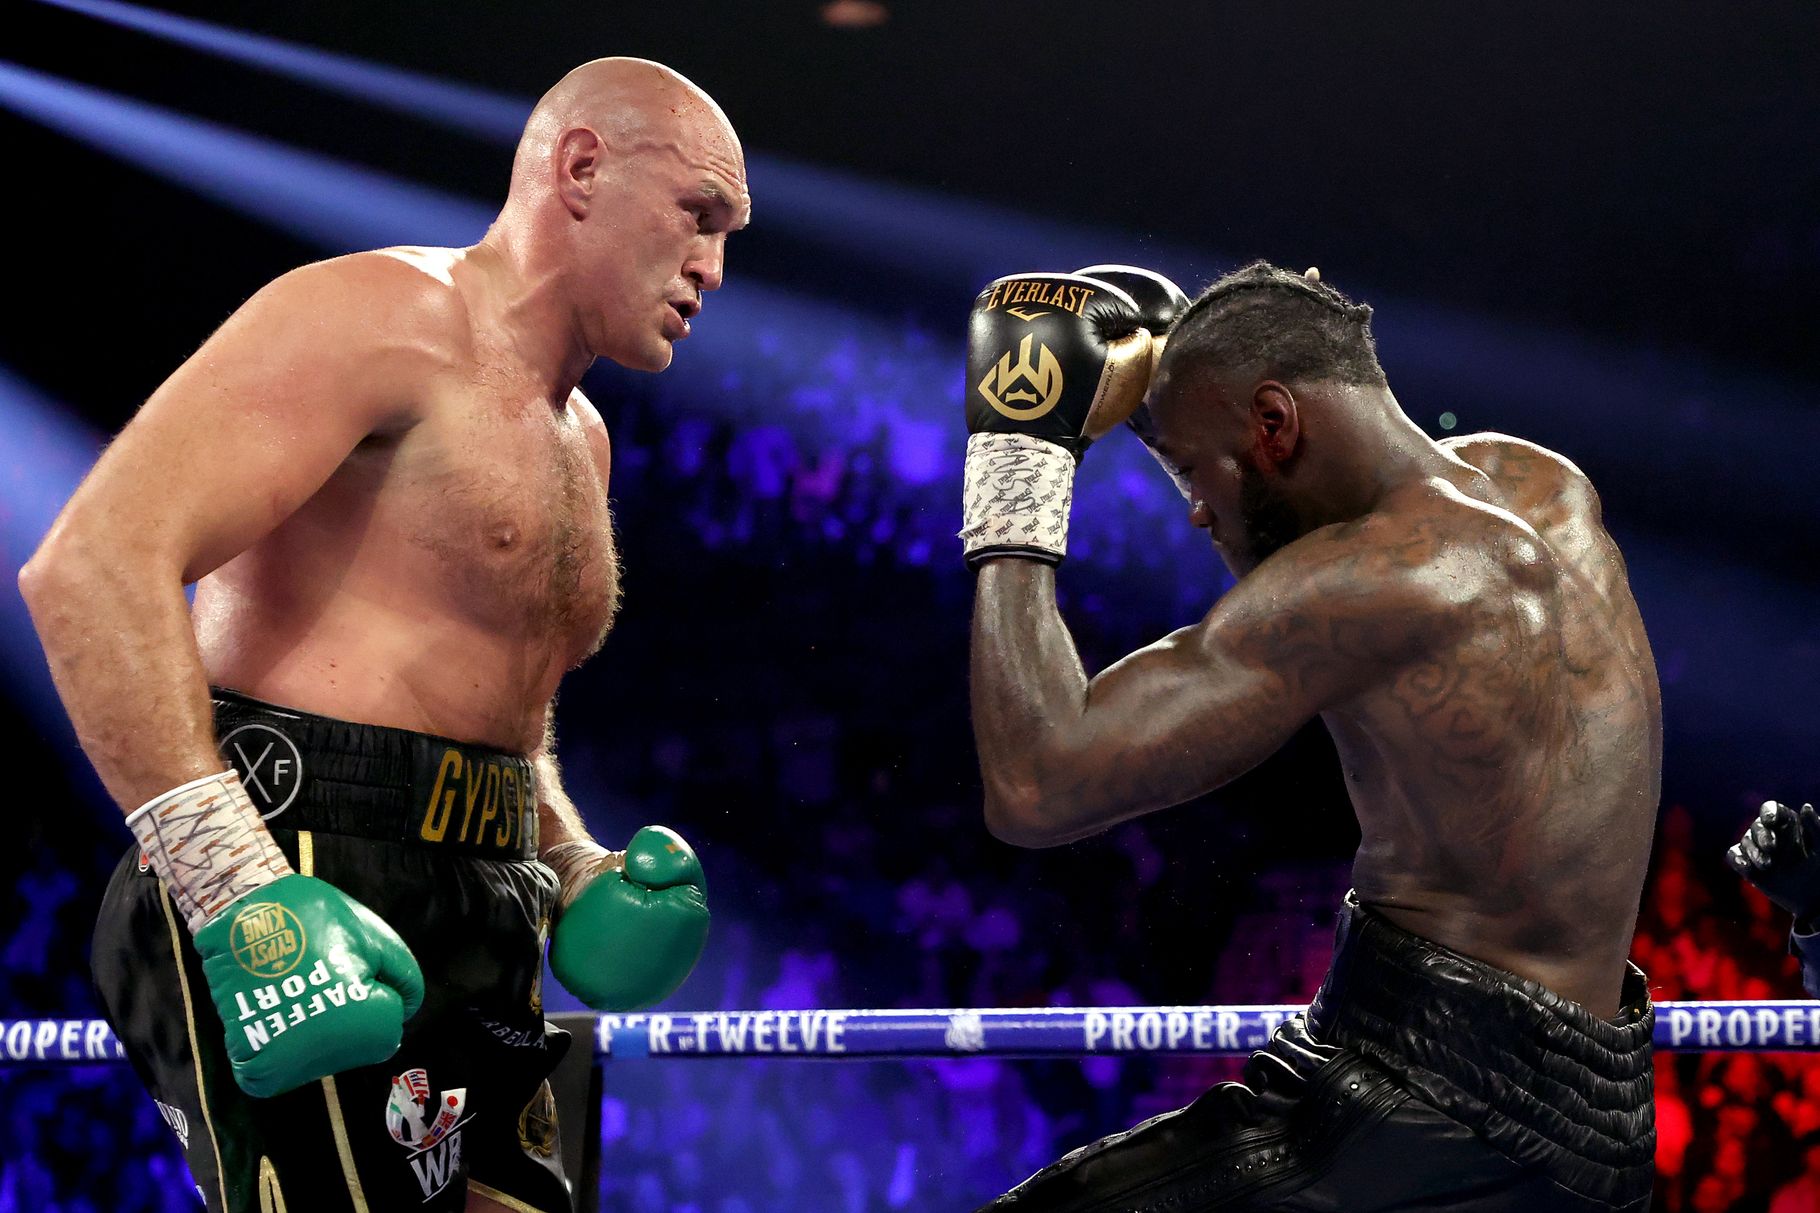 Wilder vs Fury 2 results: Tyson Fury destroys Deontay Wilder, wins seventh round TKO